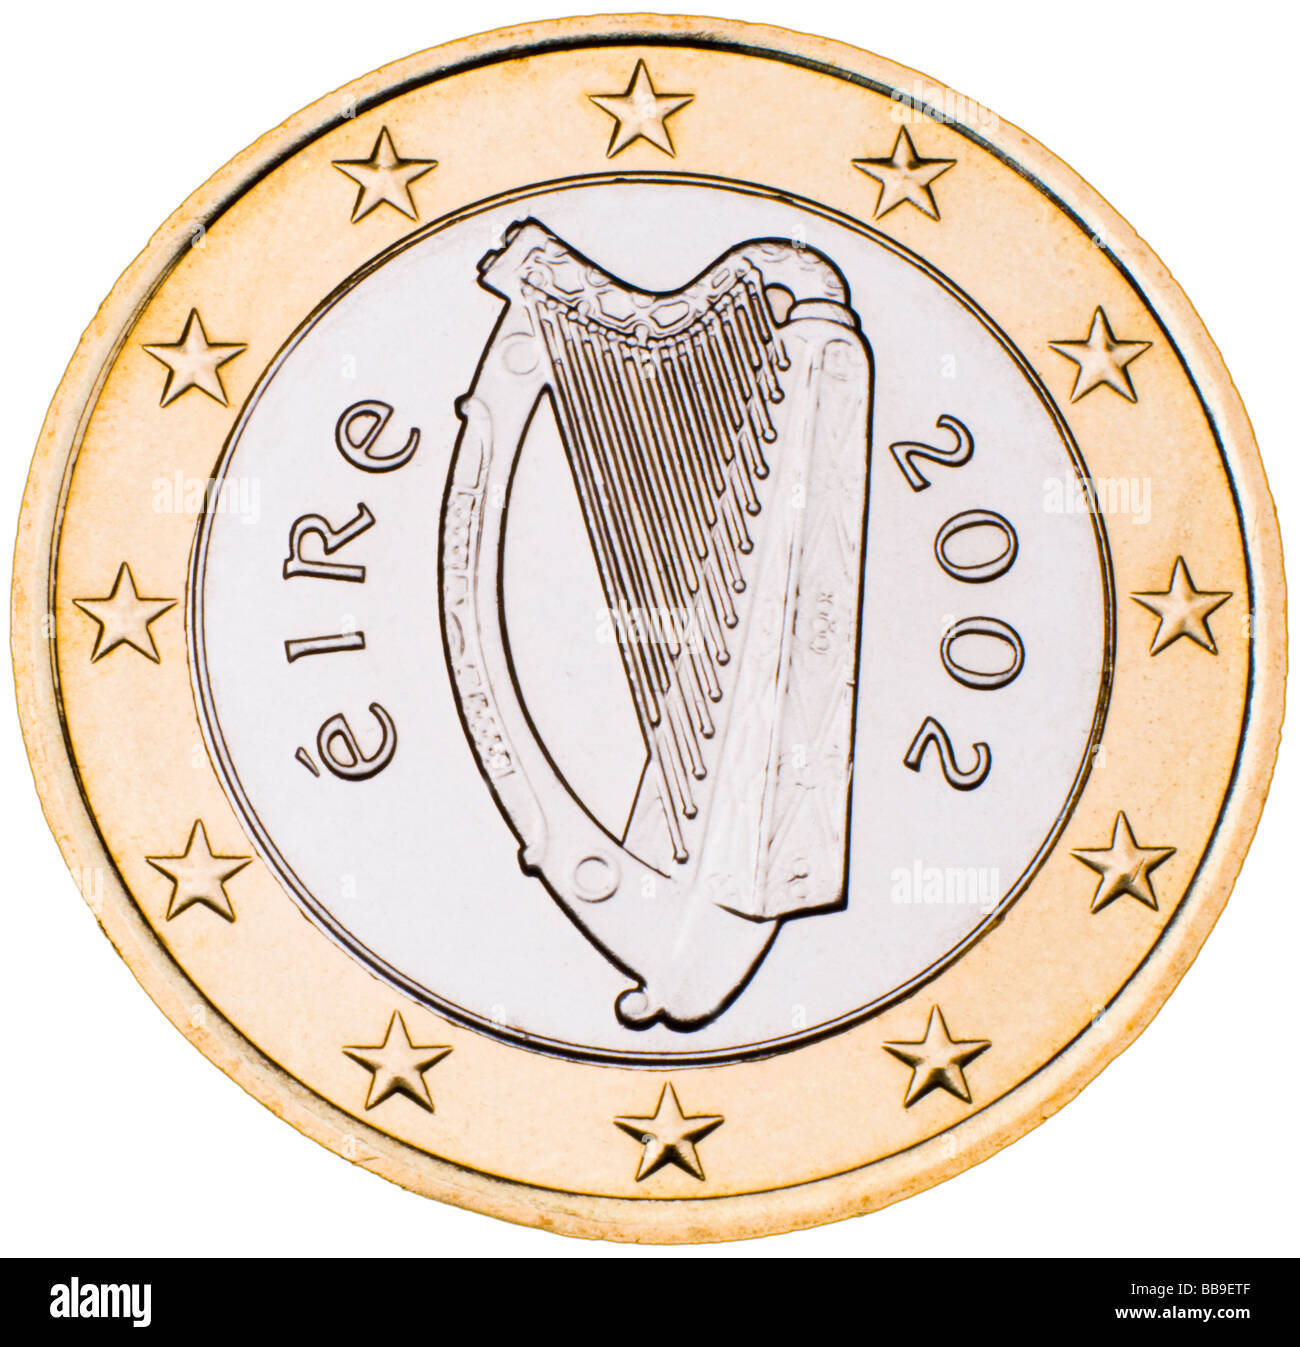 Irish 1 Euro Coin reverse Stock Photo - Alamy